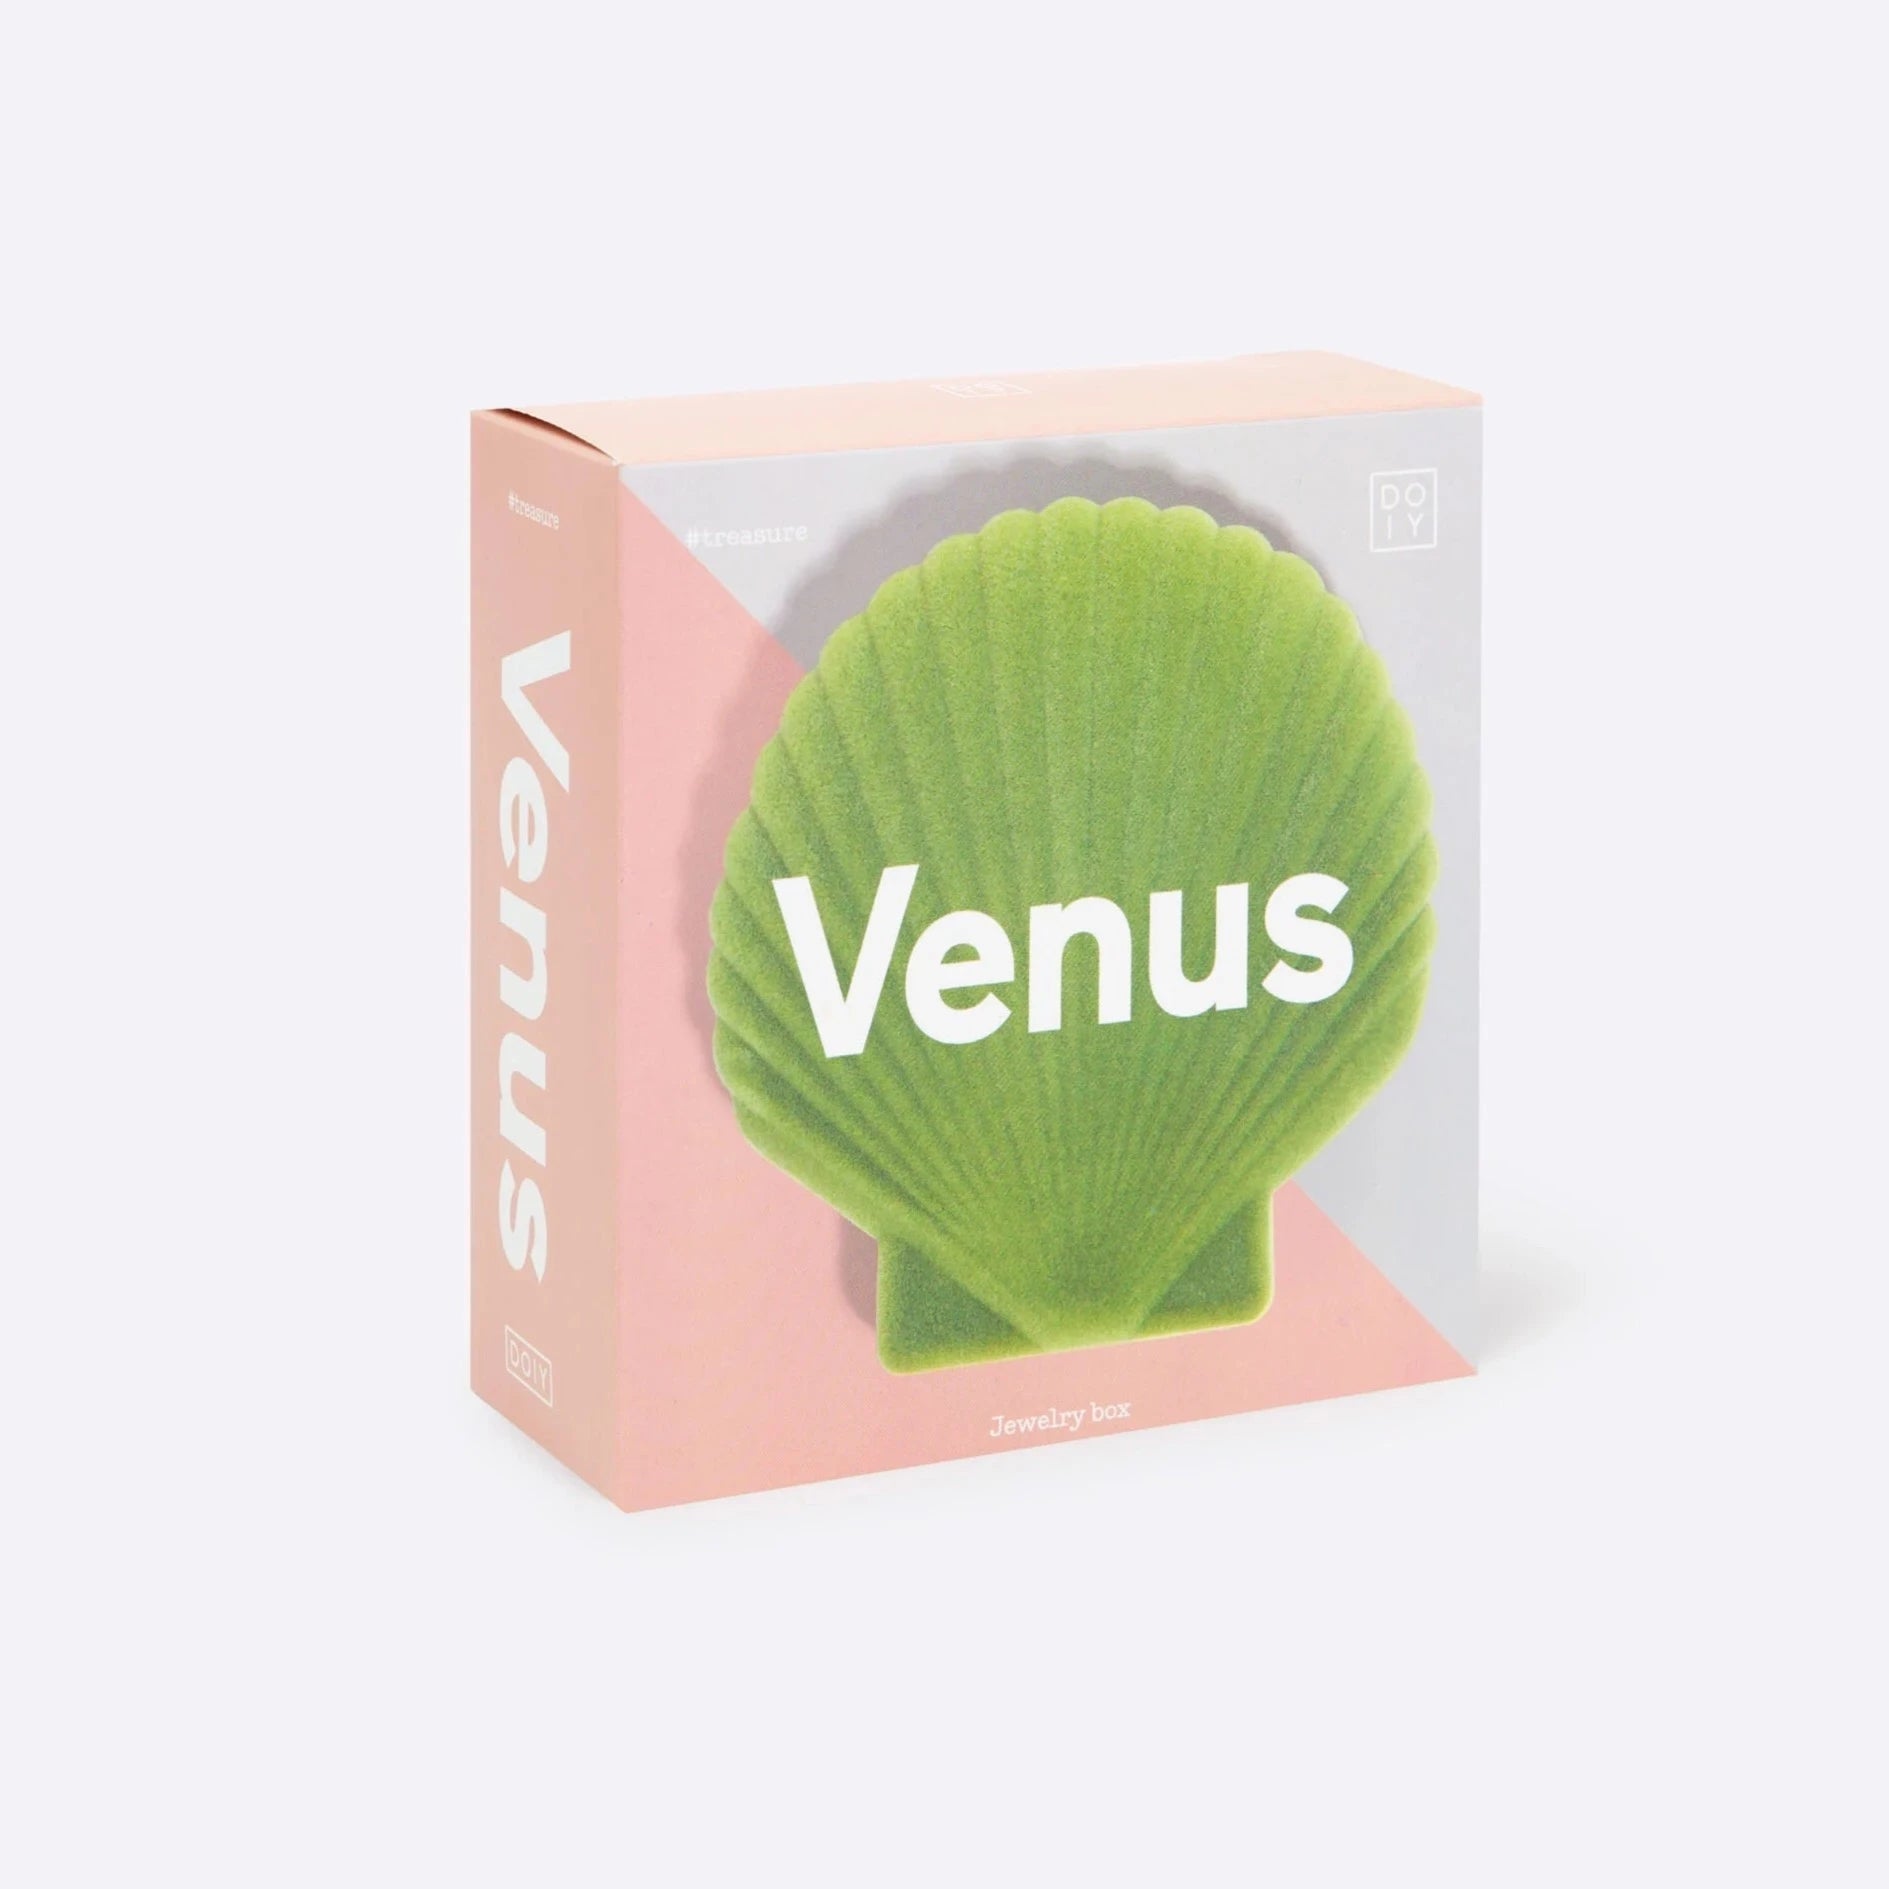 Venus Jewellery Box  Light Green by DOIY